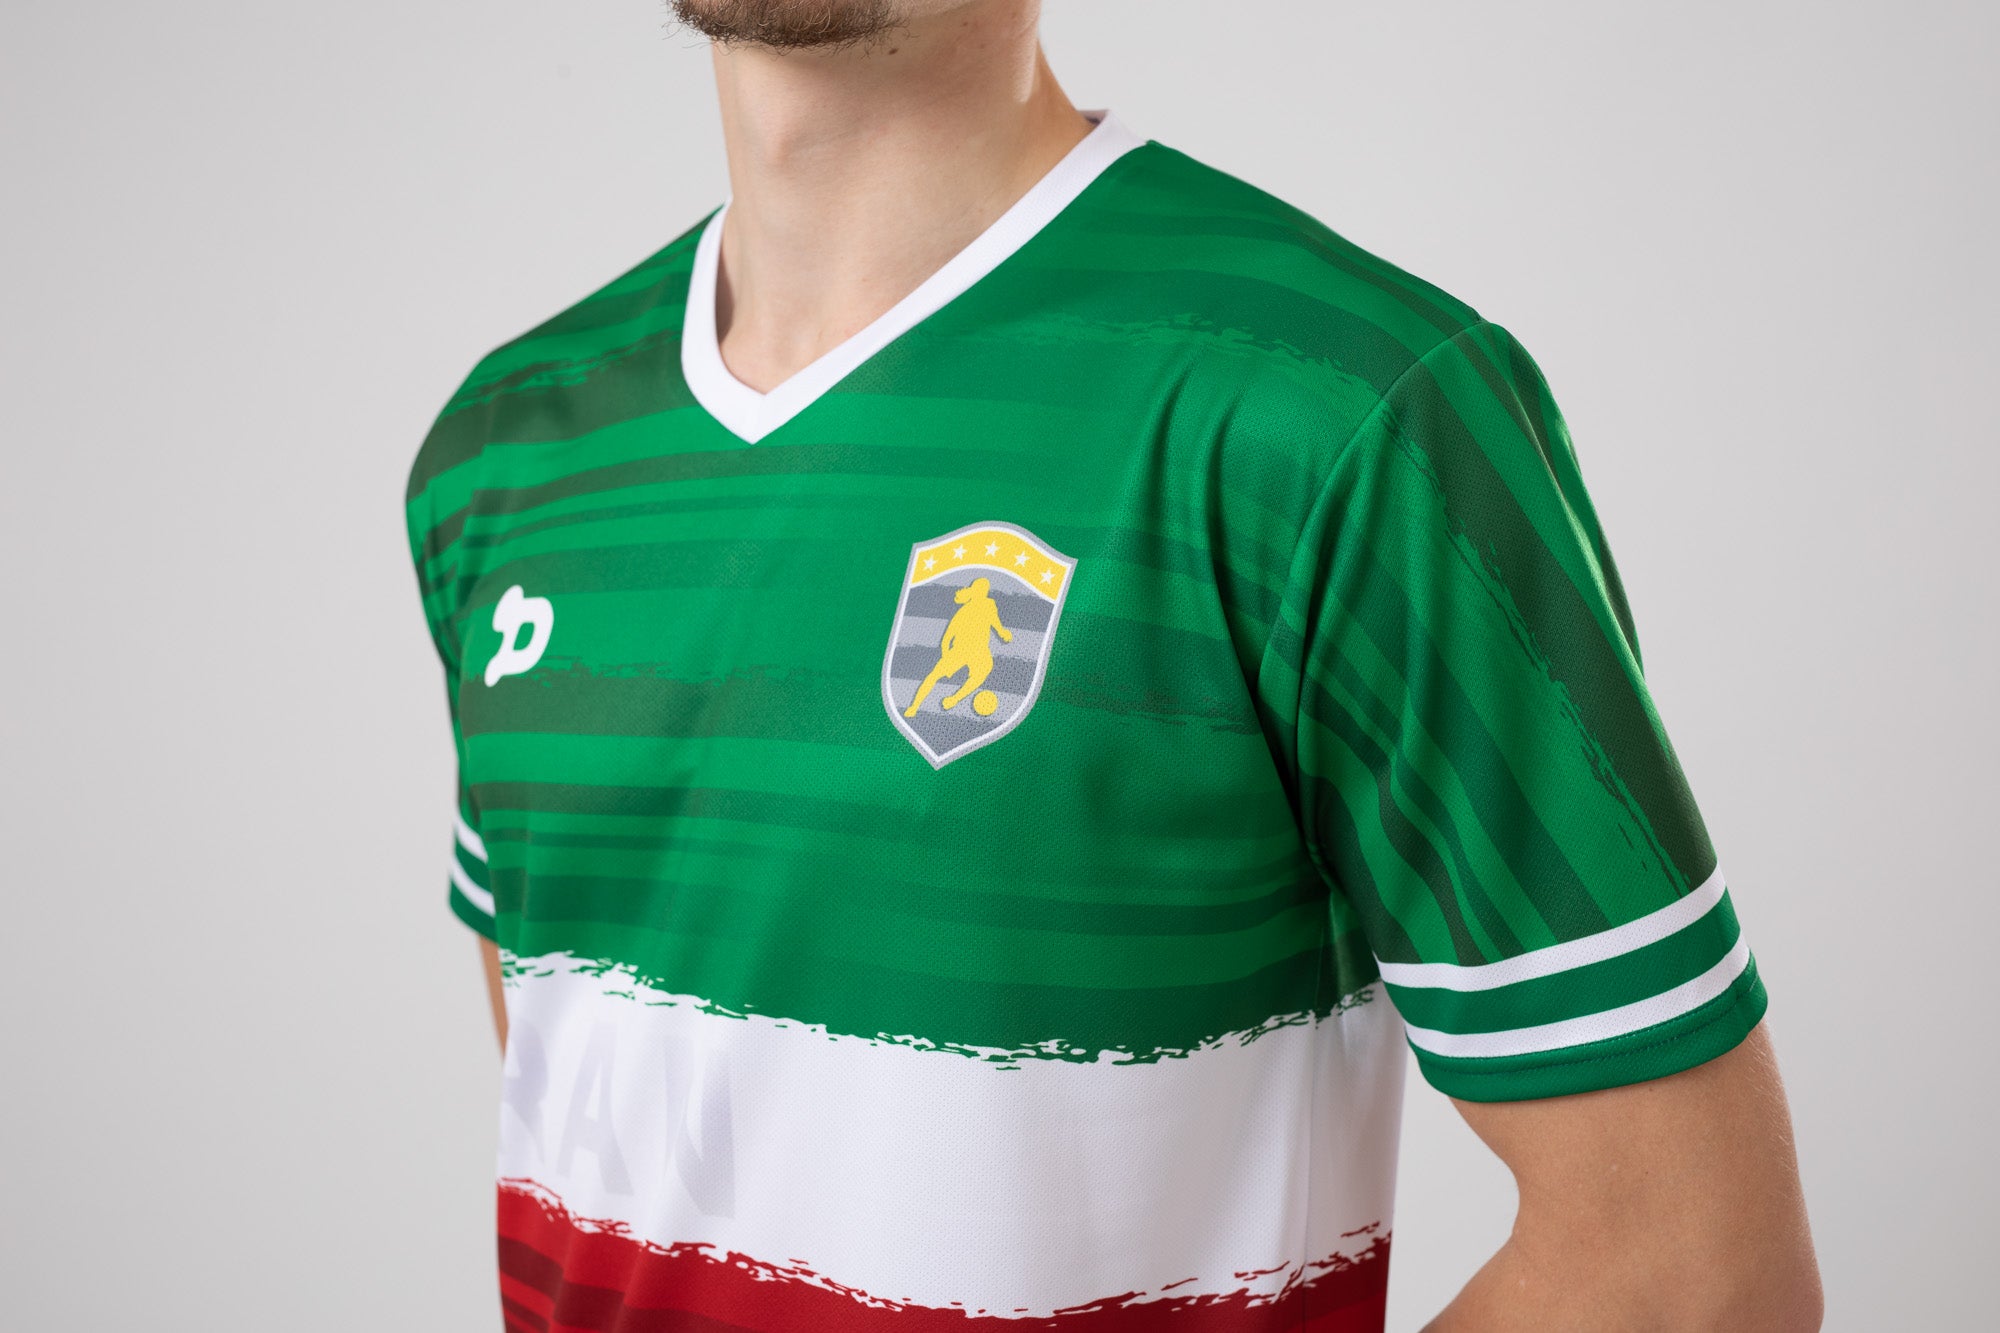 Ronaldinho Iran Jersey/Camisa Replica